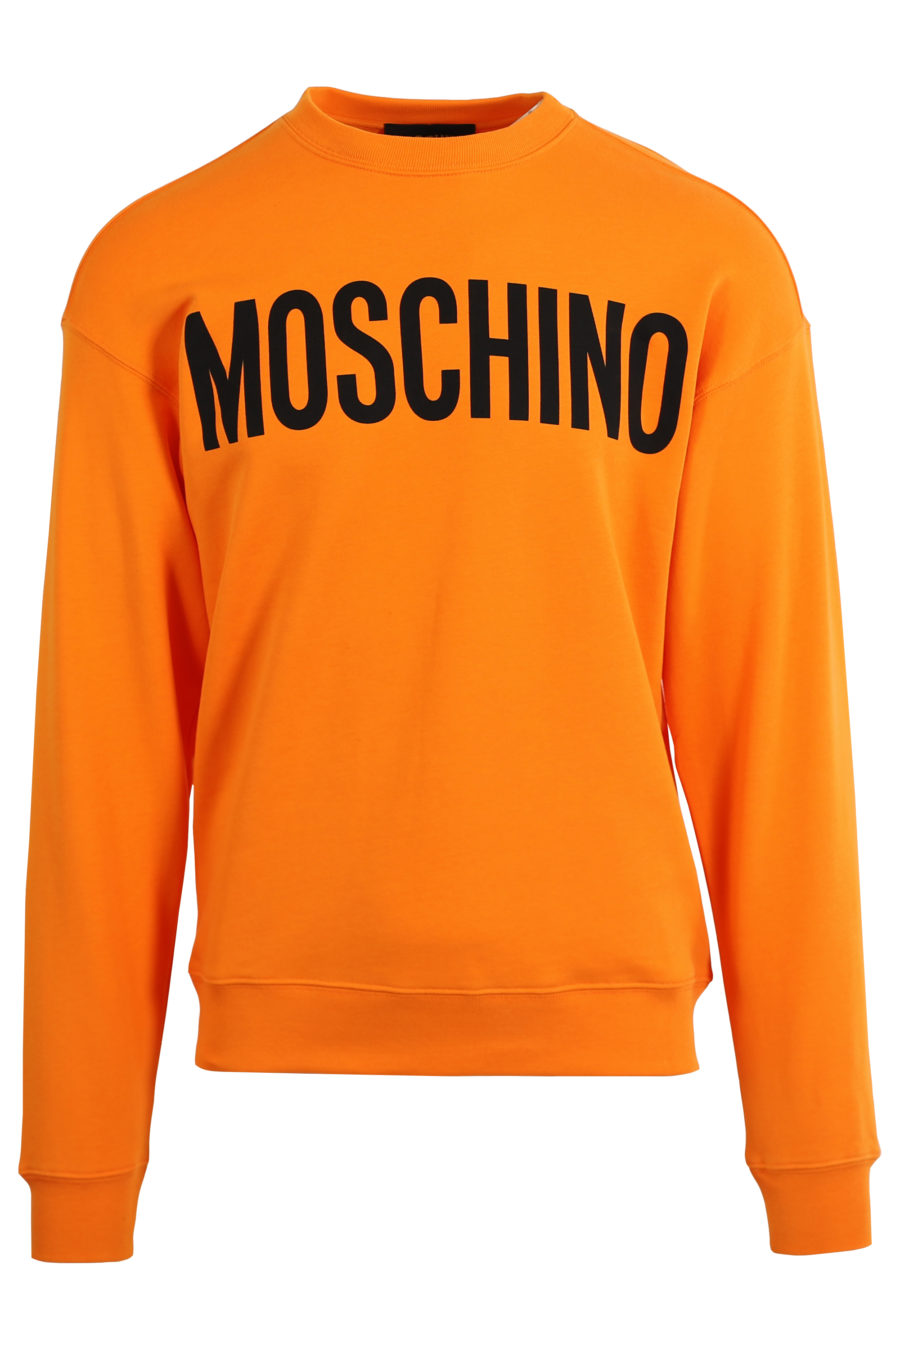 Sweatshirt orange großes Logo vorne - IMG 0991